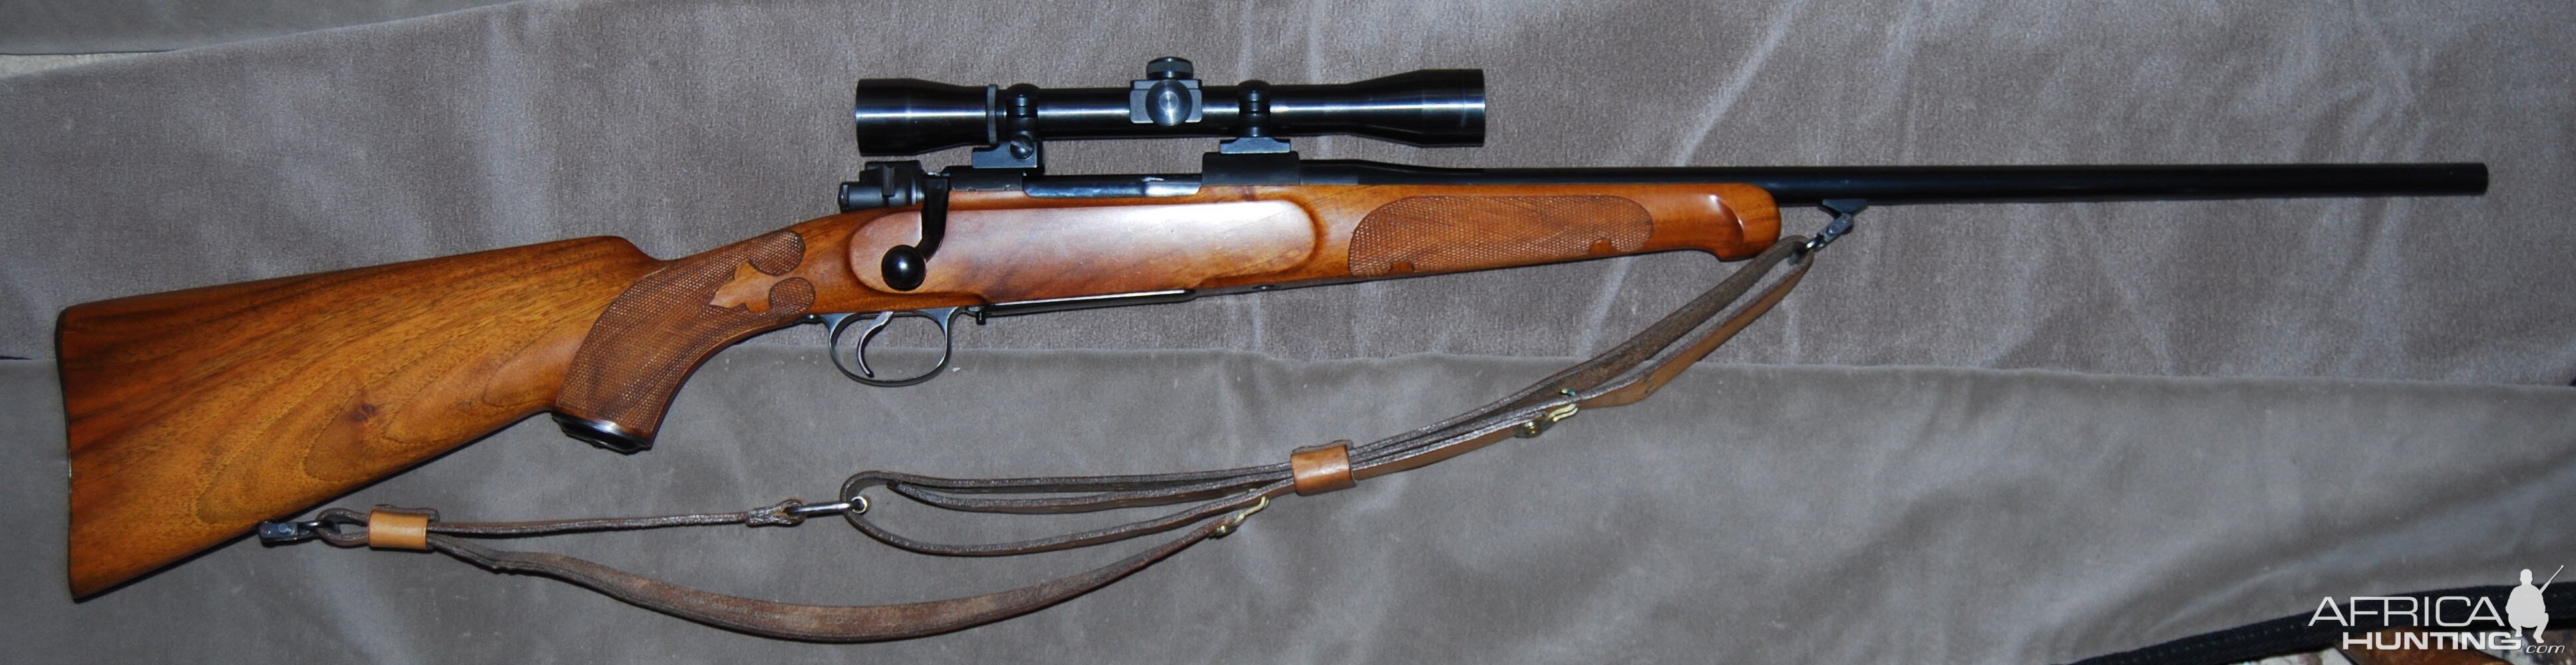 Winchester M70 (1953) full custom by Tipton Burns 404 Jeffery